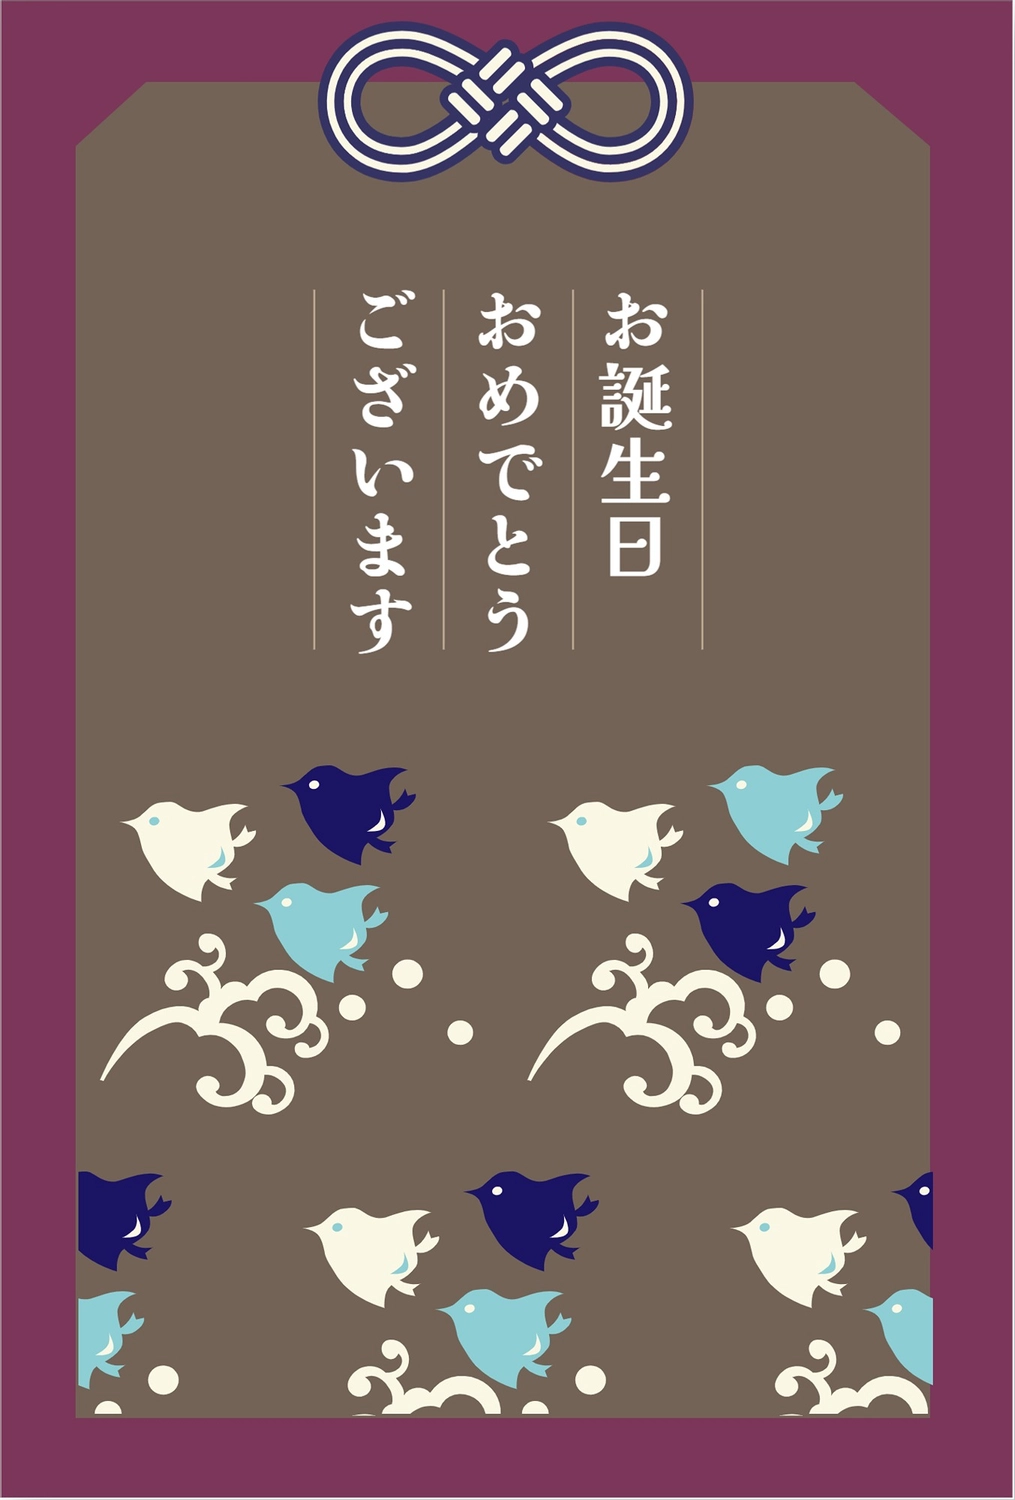 お守り型の誕生日カード, bùa hộ mệnh, hoa văn nhật bản, chim, Thiệp sinh nhật mẫu